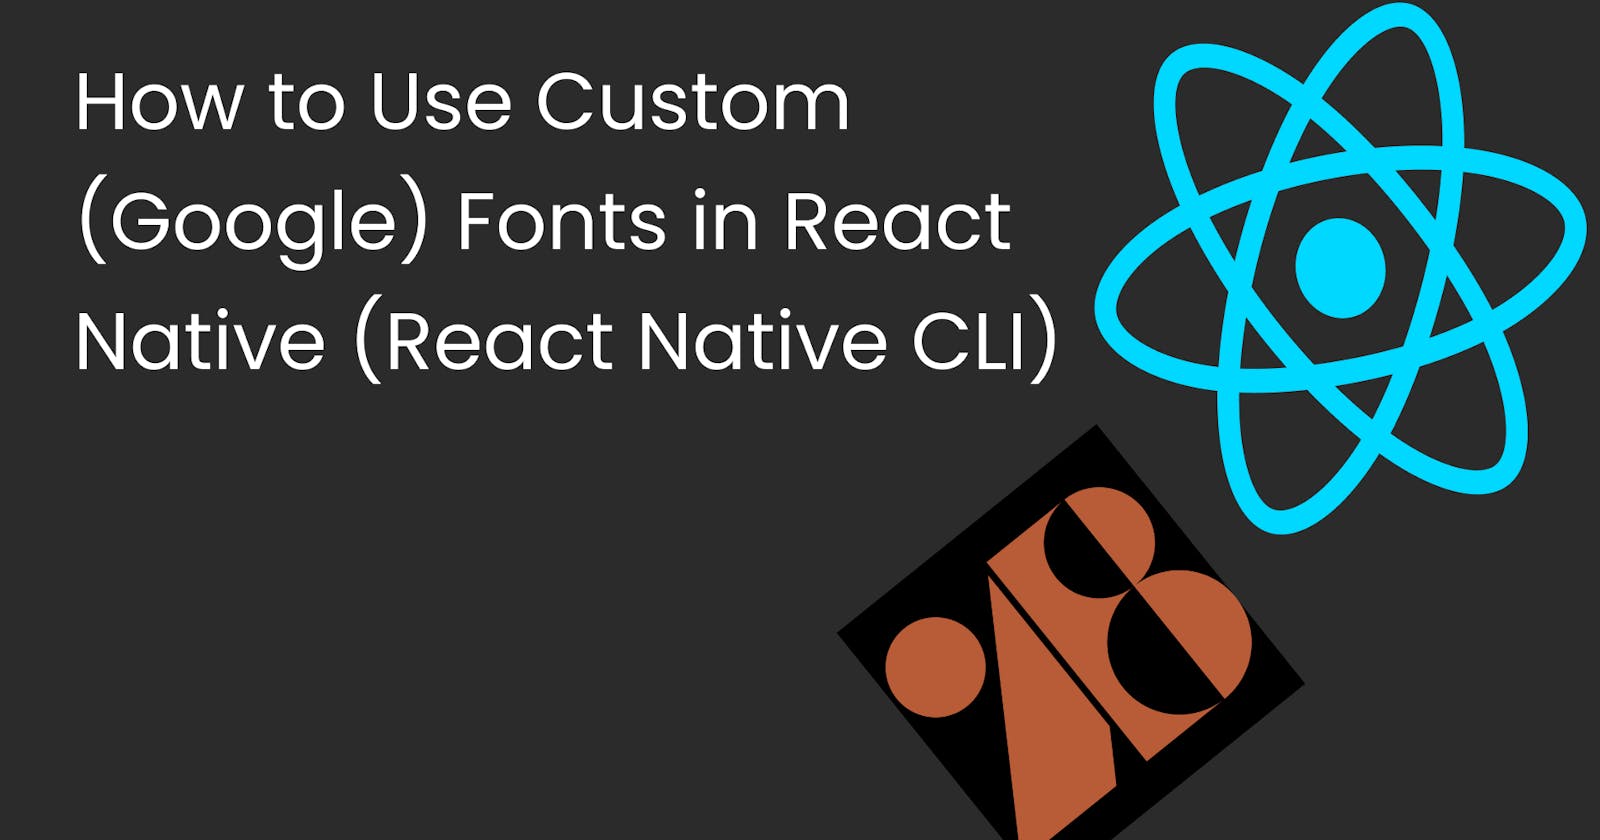 How to Use Custom (Google) Fonts in React Native (React Native CLI)